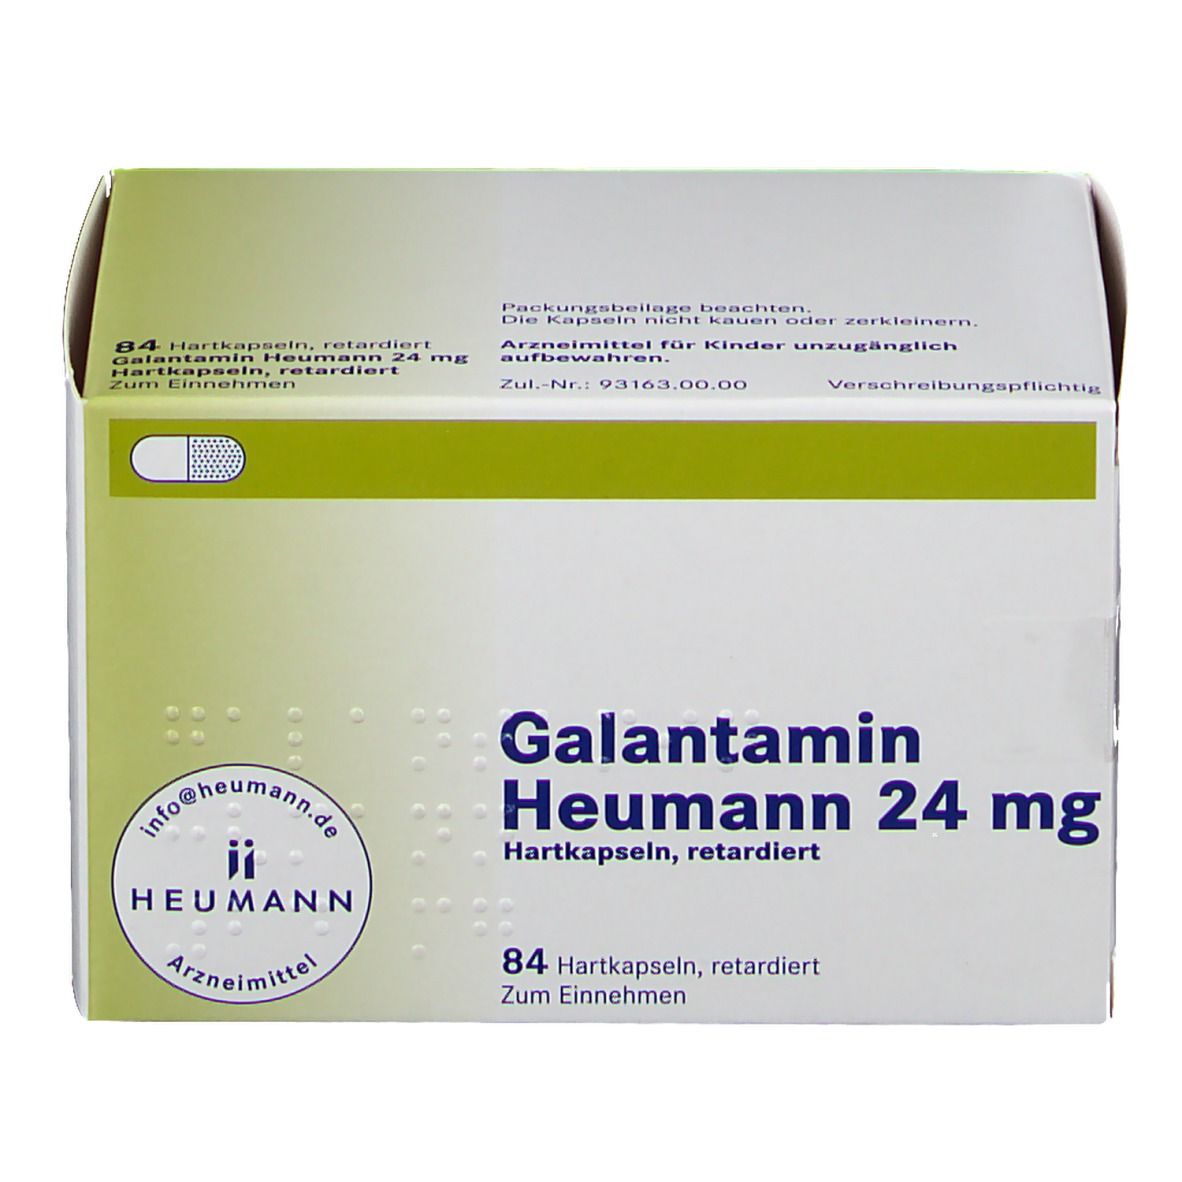 Galantamin Heumann 24 mg